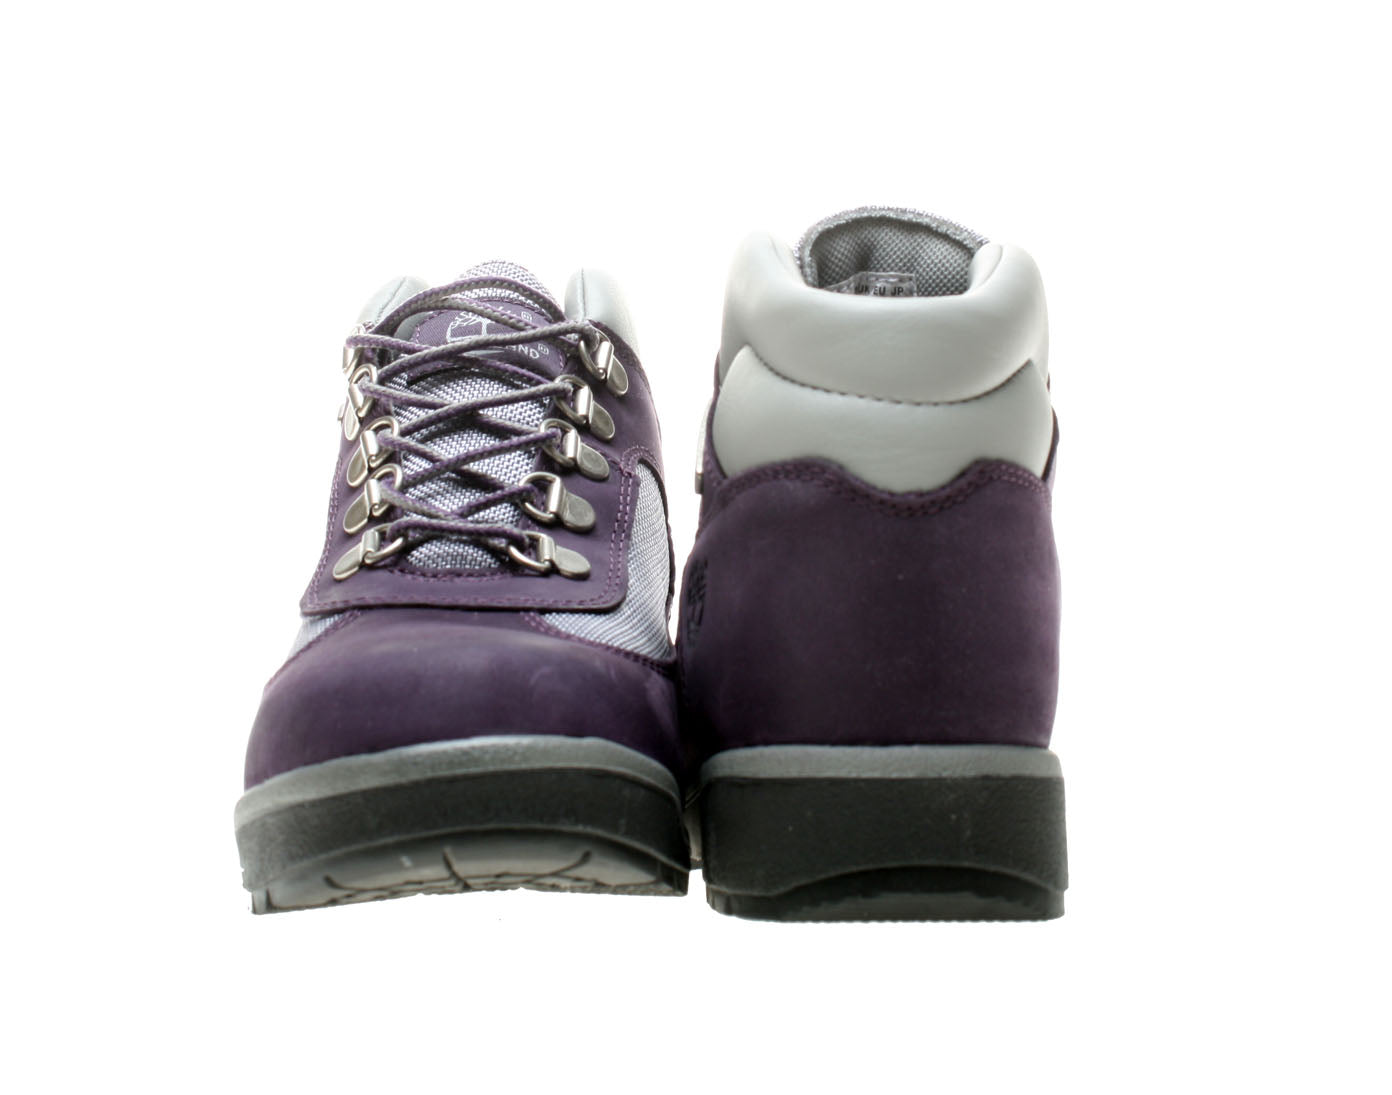 Timberland Field Boot Purple/Grey Junior Girls Boots 3295R